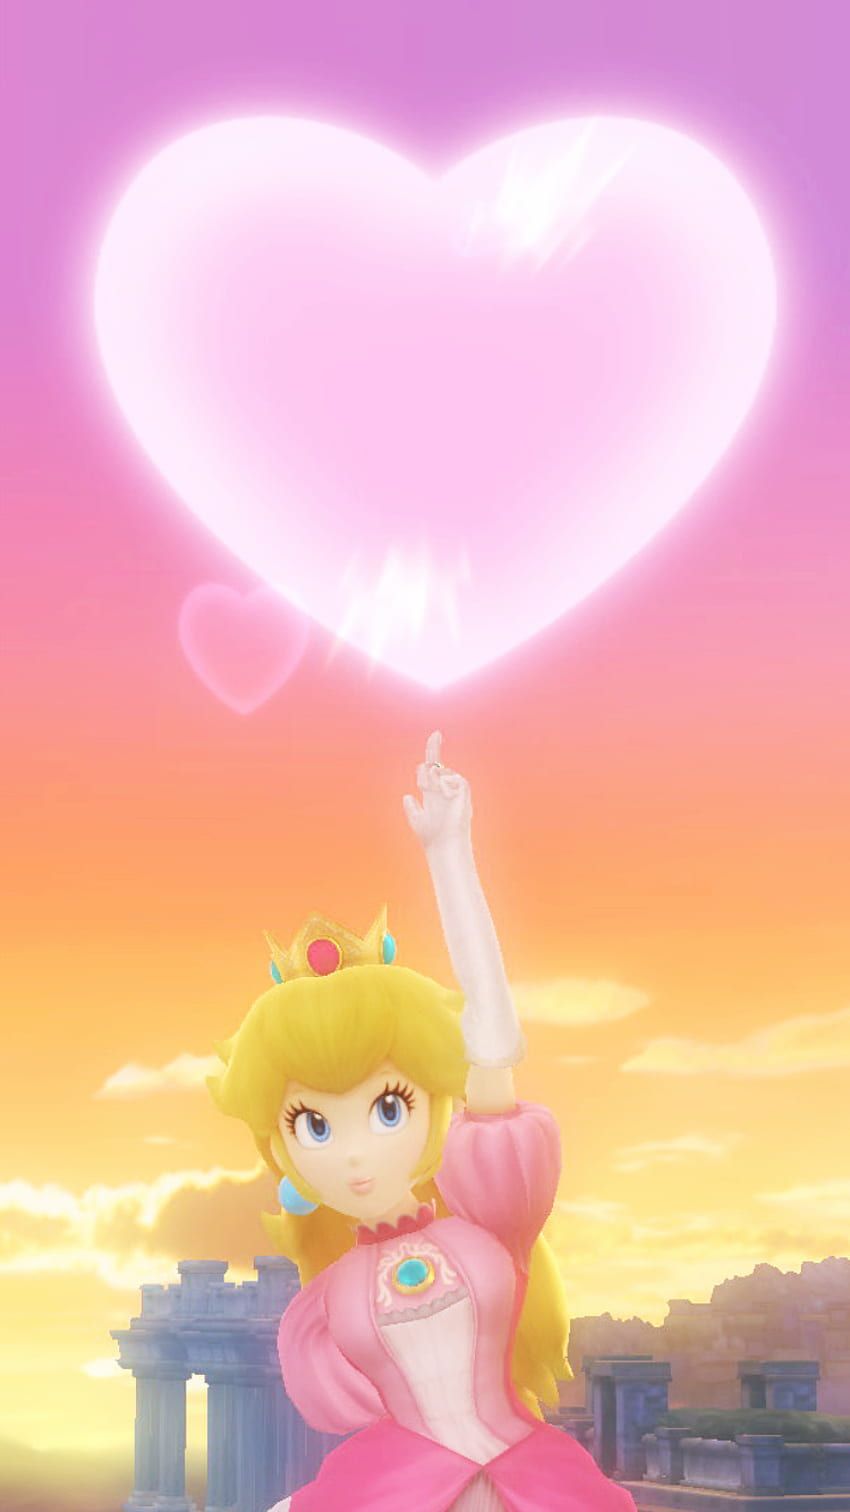 Princess Peach from Super Mario games, holding up a heart. - Princess Peach